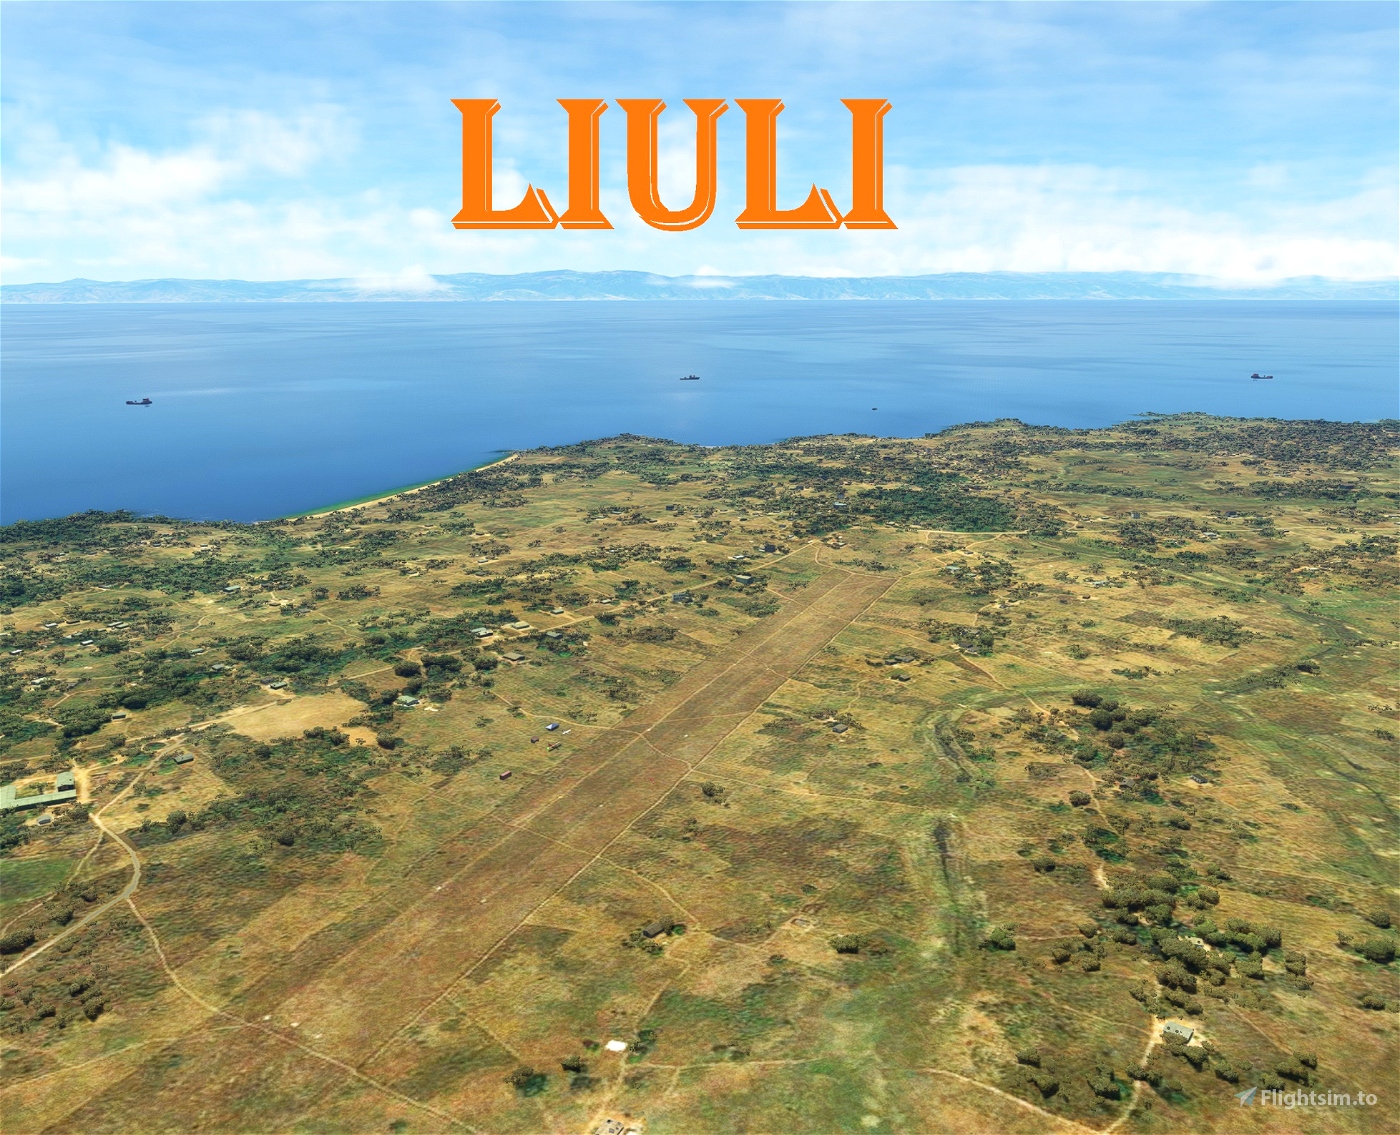 HTLL - Liuli - Tanzania (Lake Malawi) Microsoft Flight Simulator